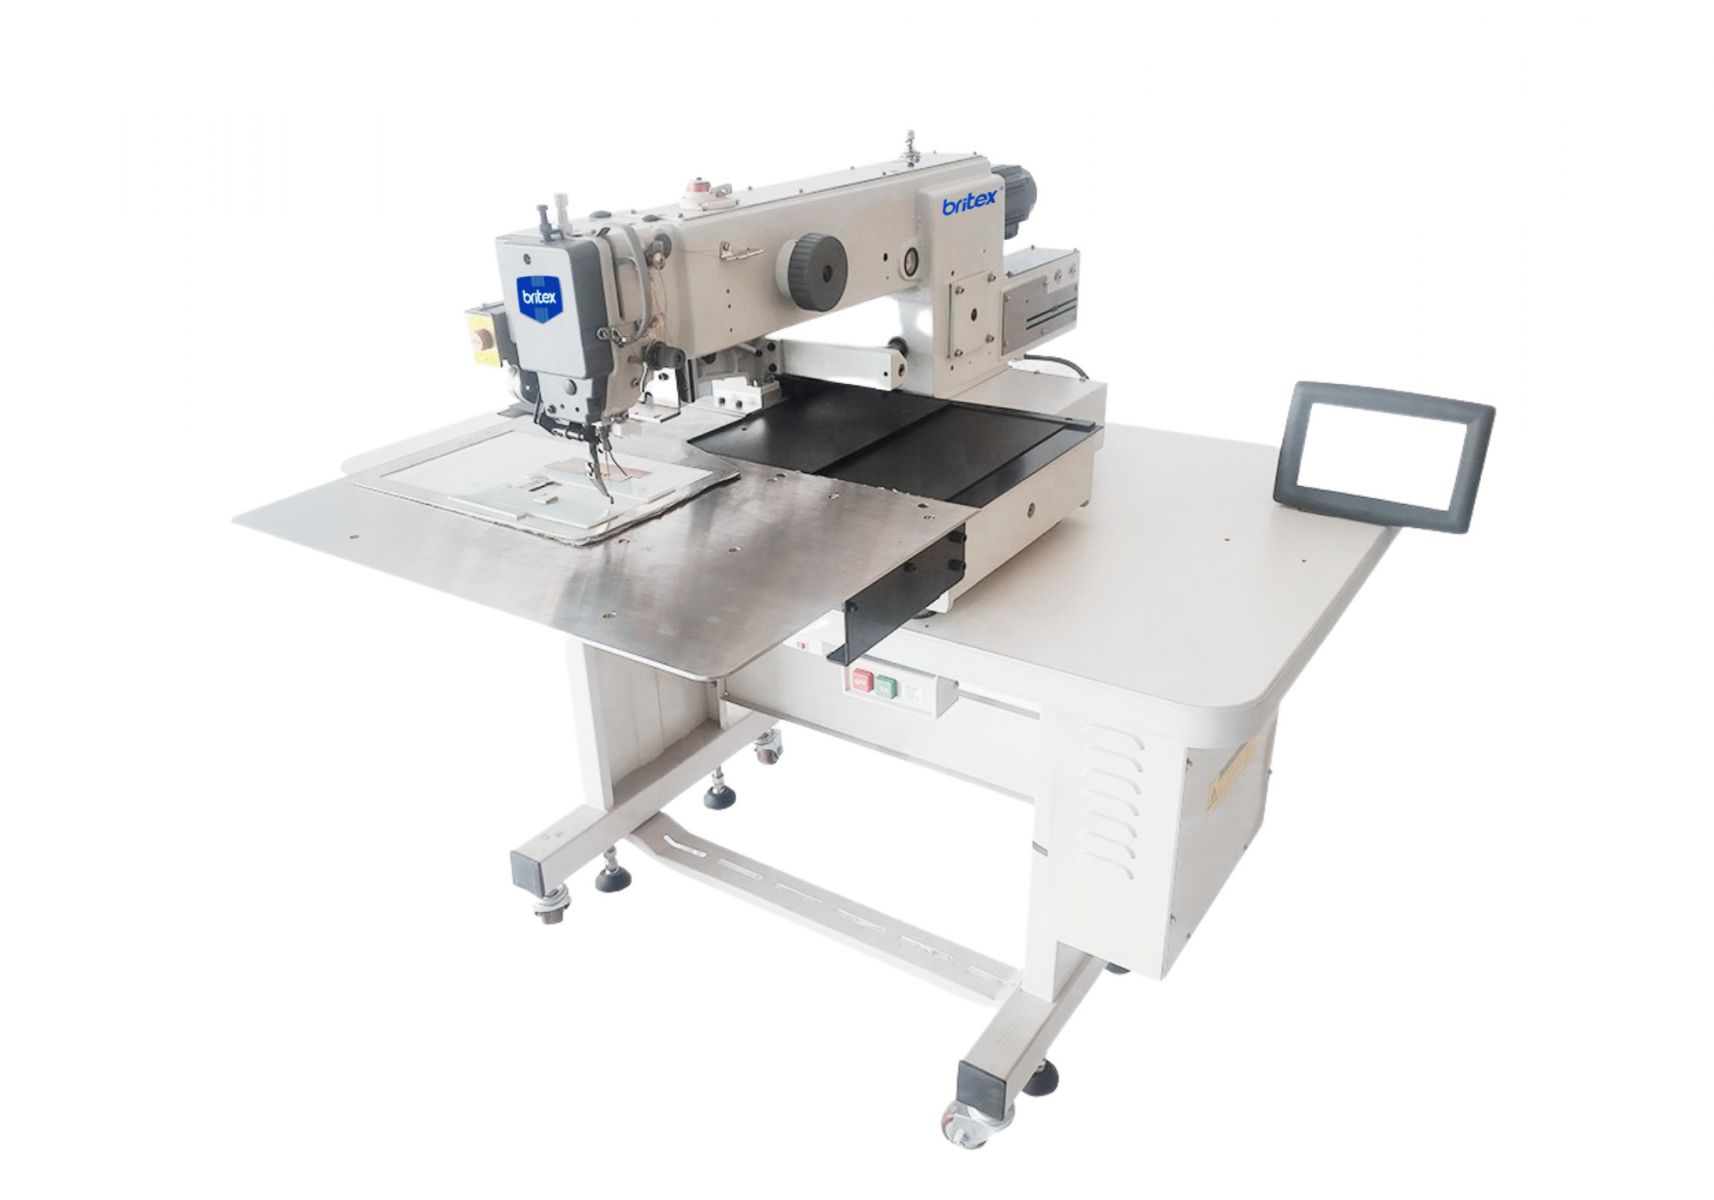 Electronic Pattern Sewing Machine 250mmx160mm, (Mitsubishi Type) - Brand: Britex, Model: BR-2516R